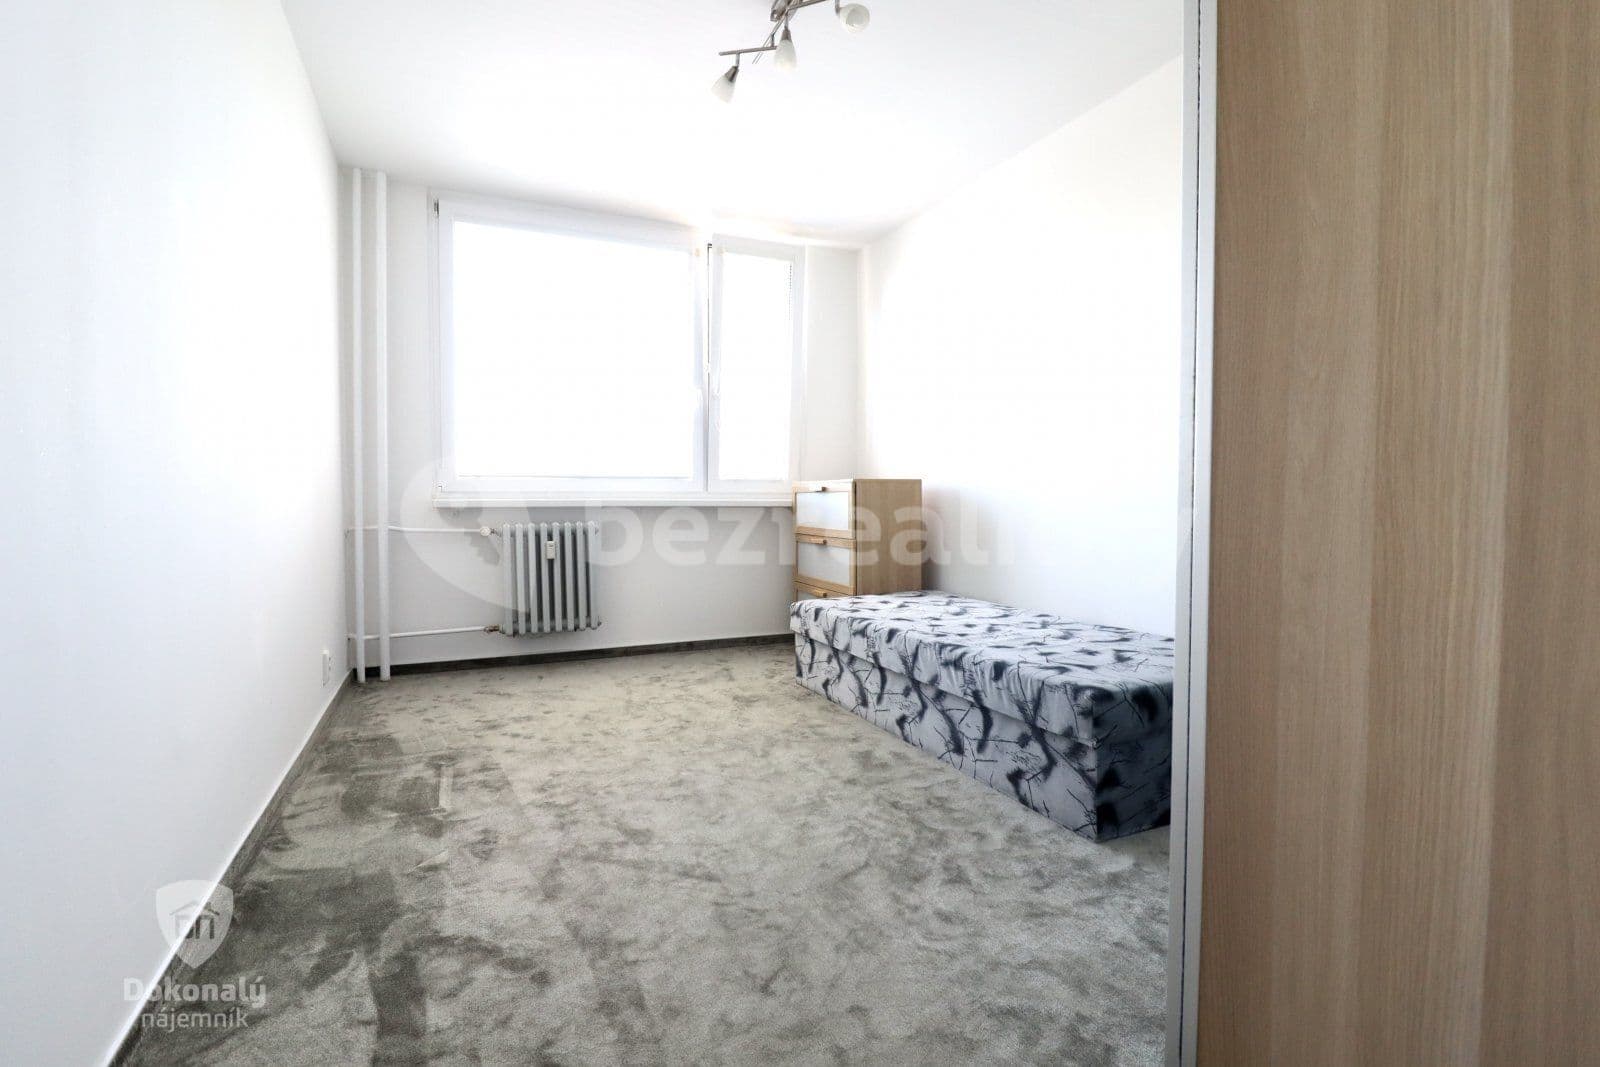 2 bedroom with open-plan kitchen flat to rent, 82 m², Plickova, Prague, Prague